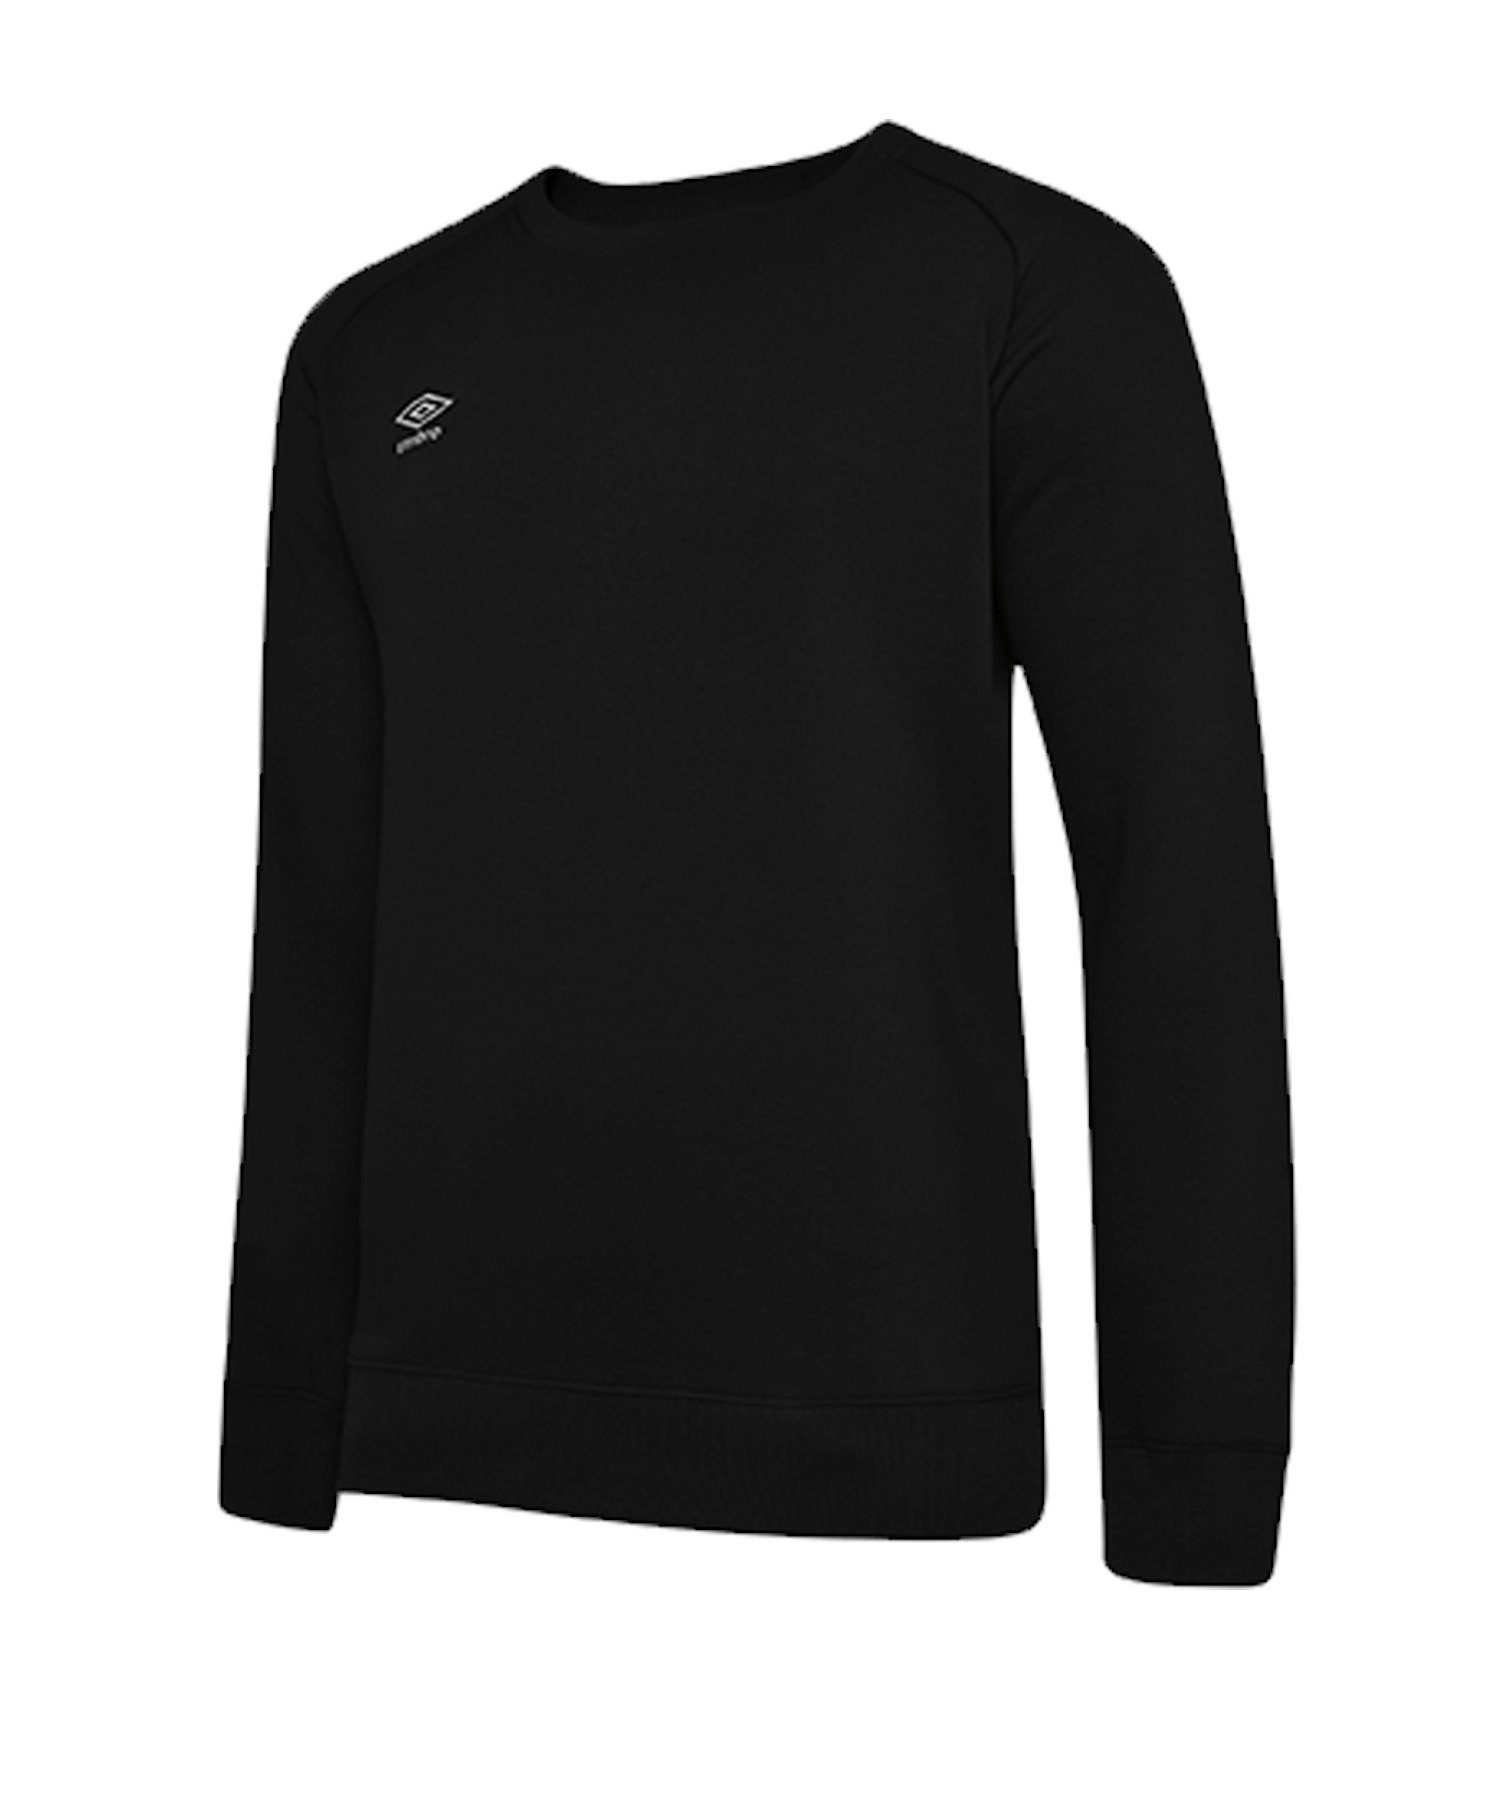 Umbro Sweatshirt Club Leisure Sweatshirt schwarzweiss